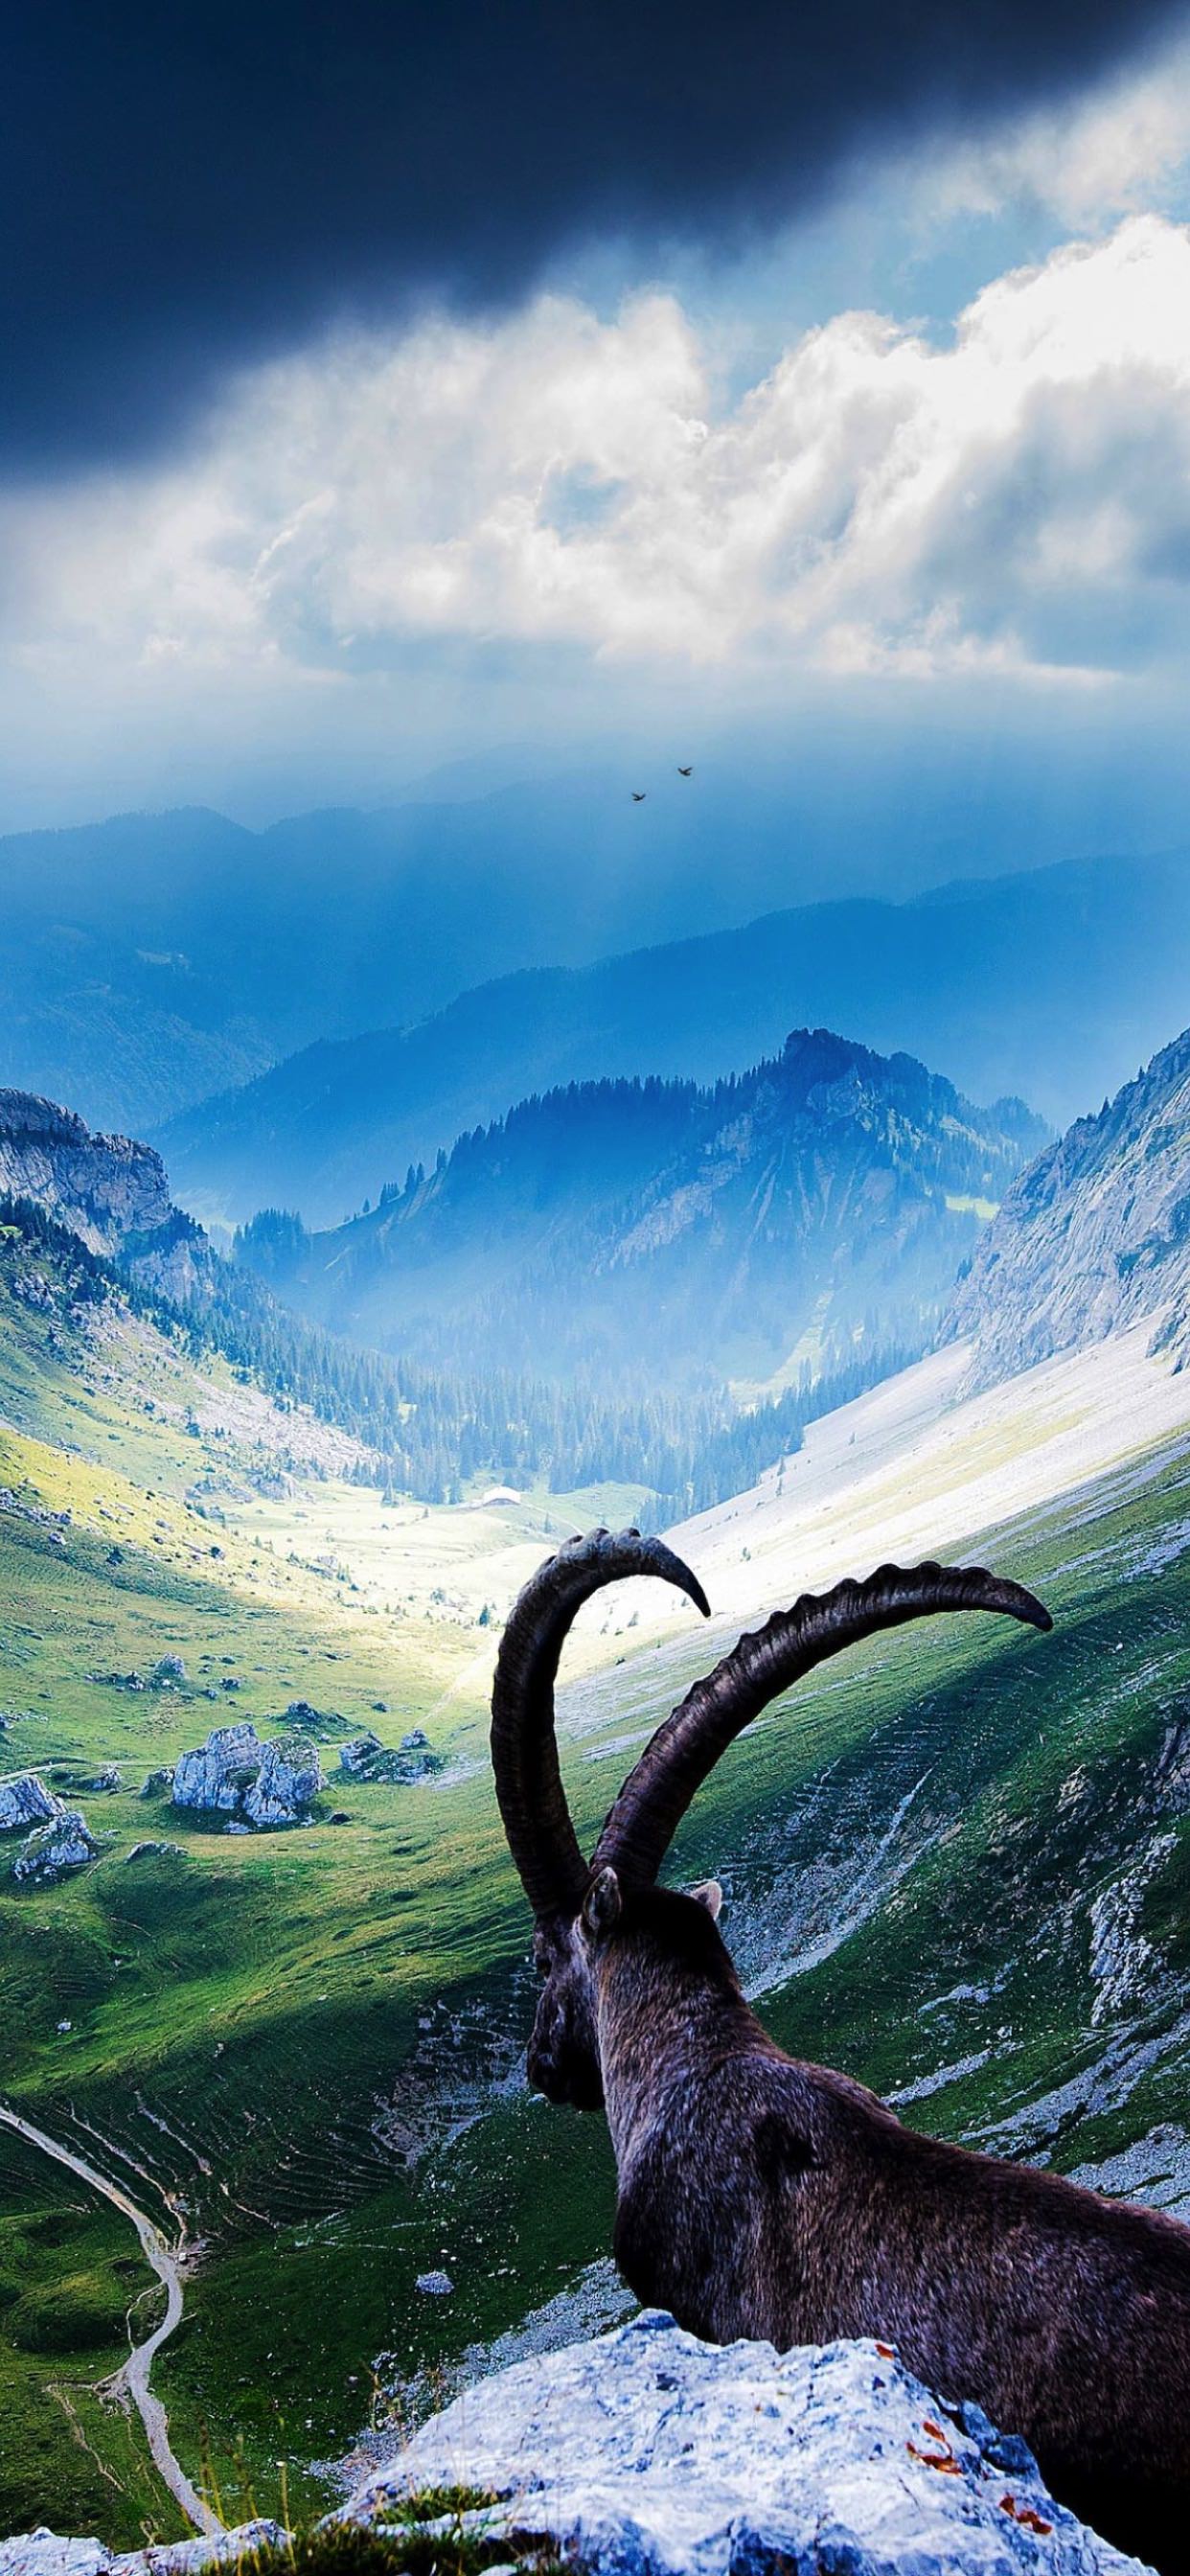 Rocky mountain landscape | wallpaper.sc iPhone XS Max